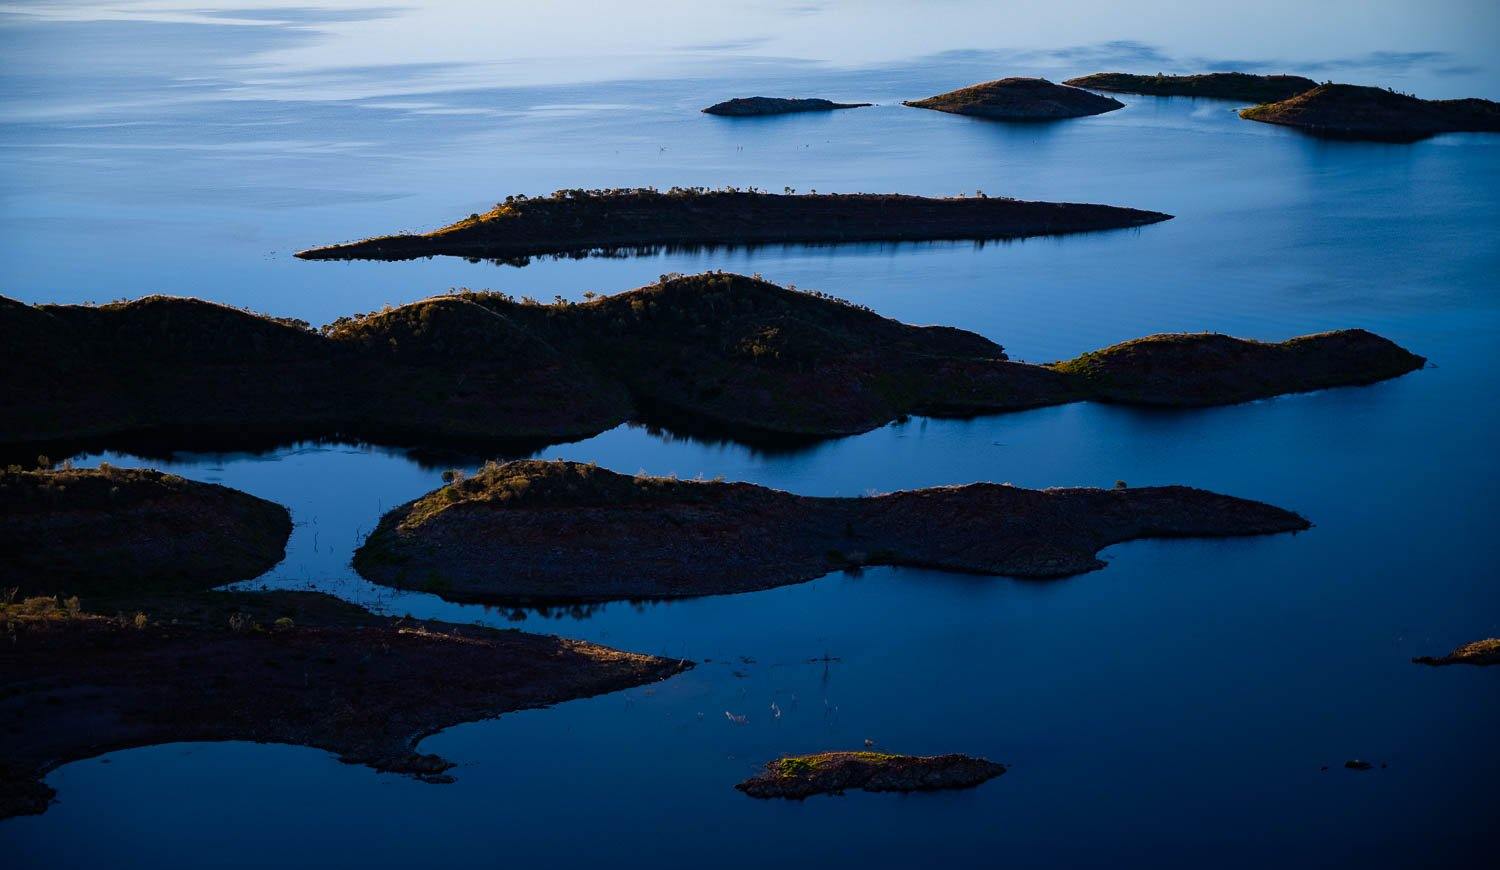 Large black mountain islands in the lake, Lake Argyle #6 - The Kimberley